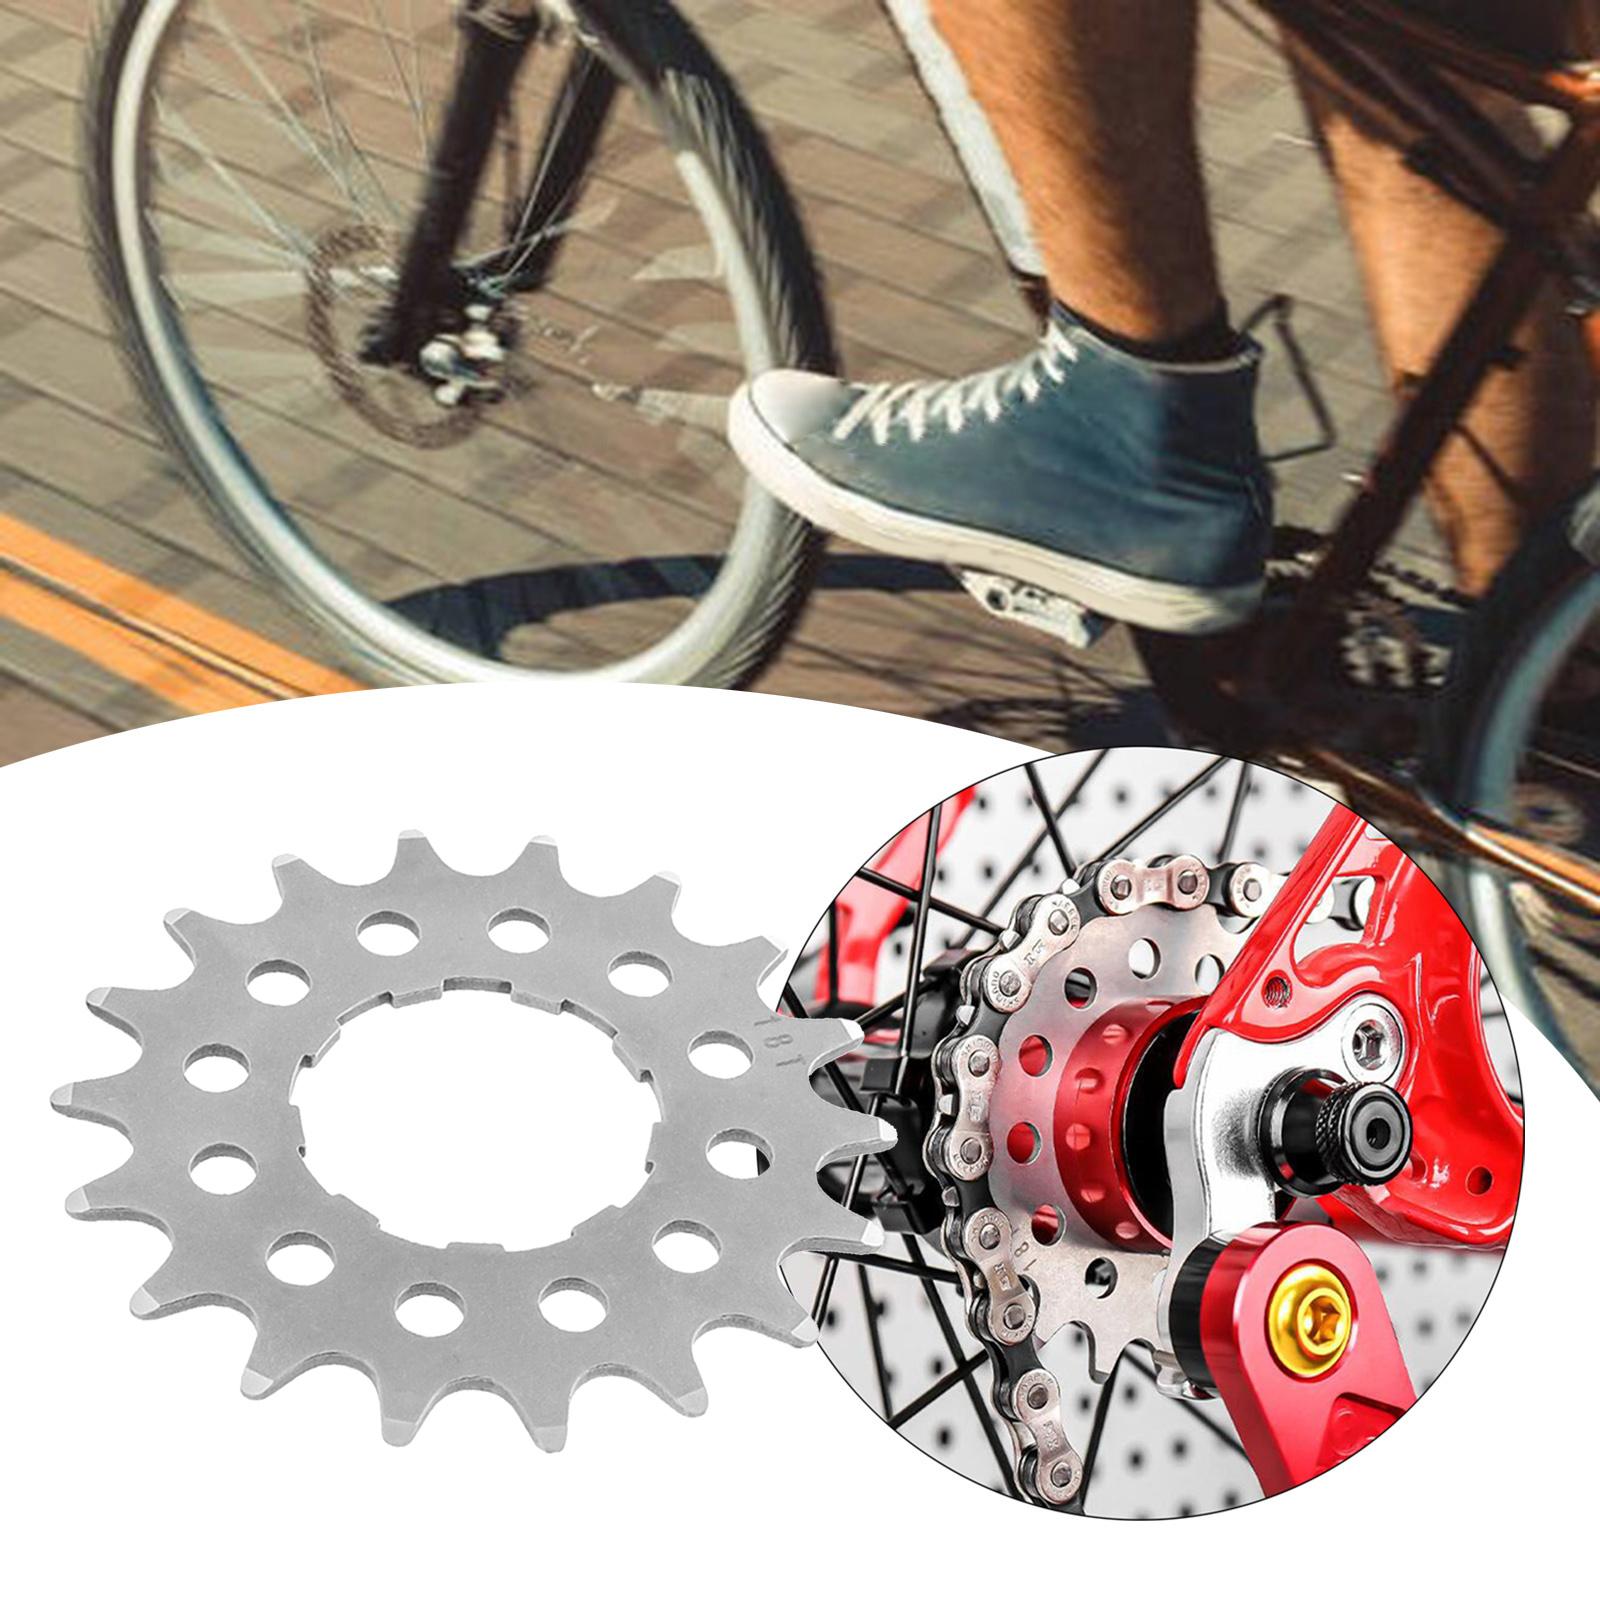 Single Speed Cassette Cog Bike Freewheel Bicycle Refit Parts Components 18T